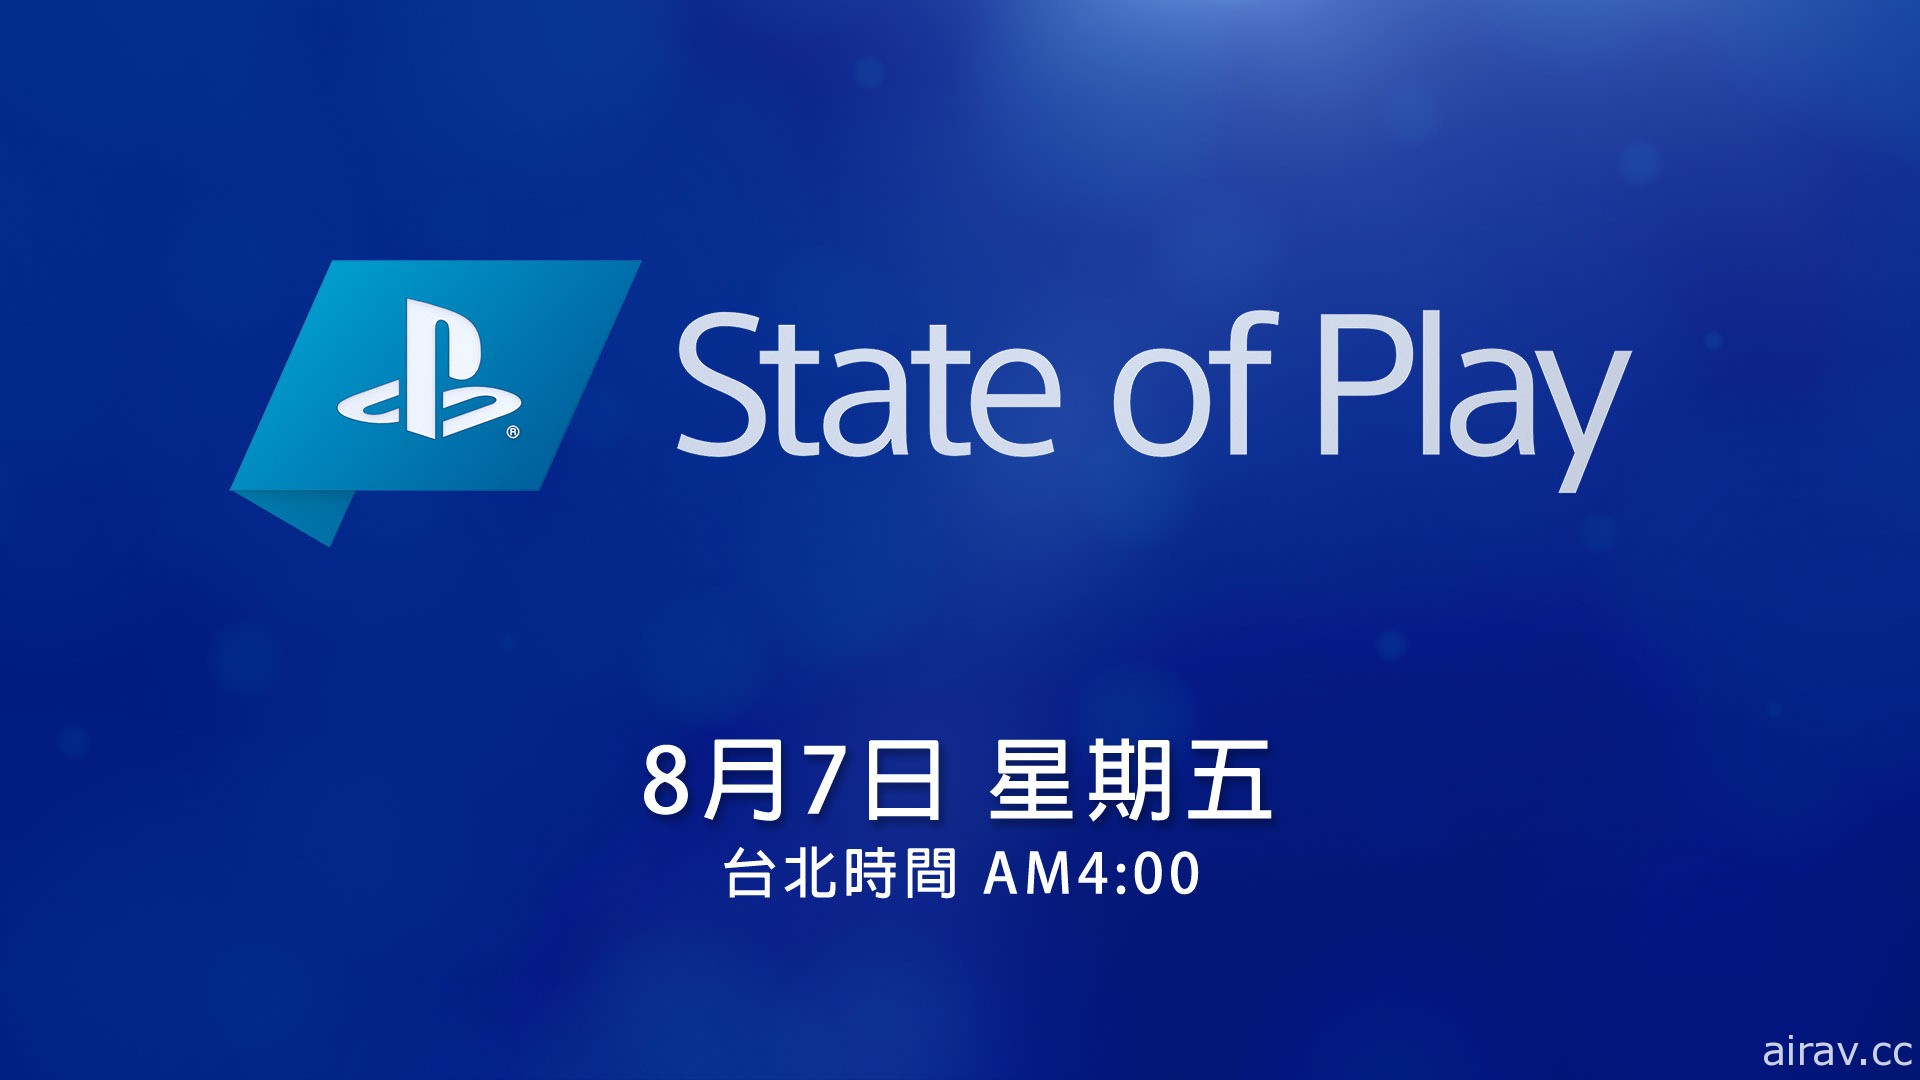 PlayStation 直播节目“State of Play”本周五凌晨登场 将以 PS4 与 PS VR 三厂游戏为主